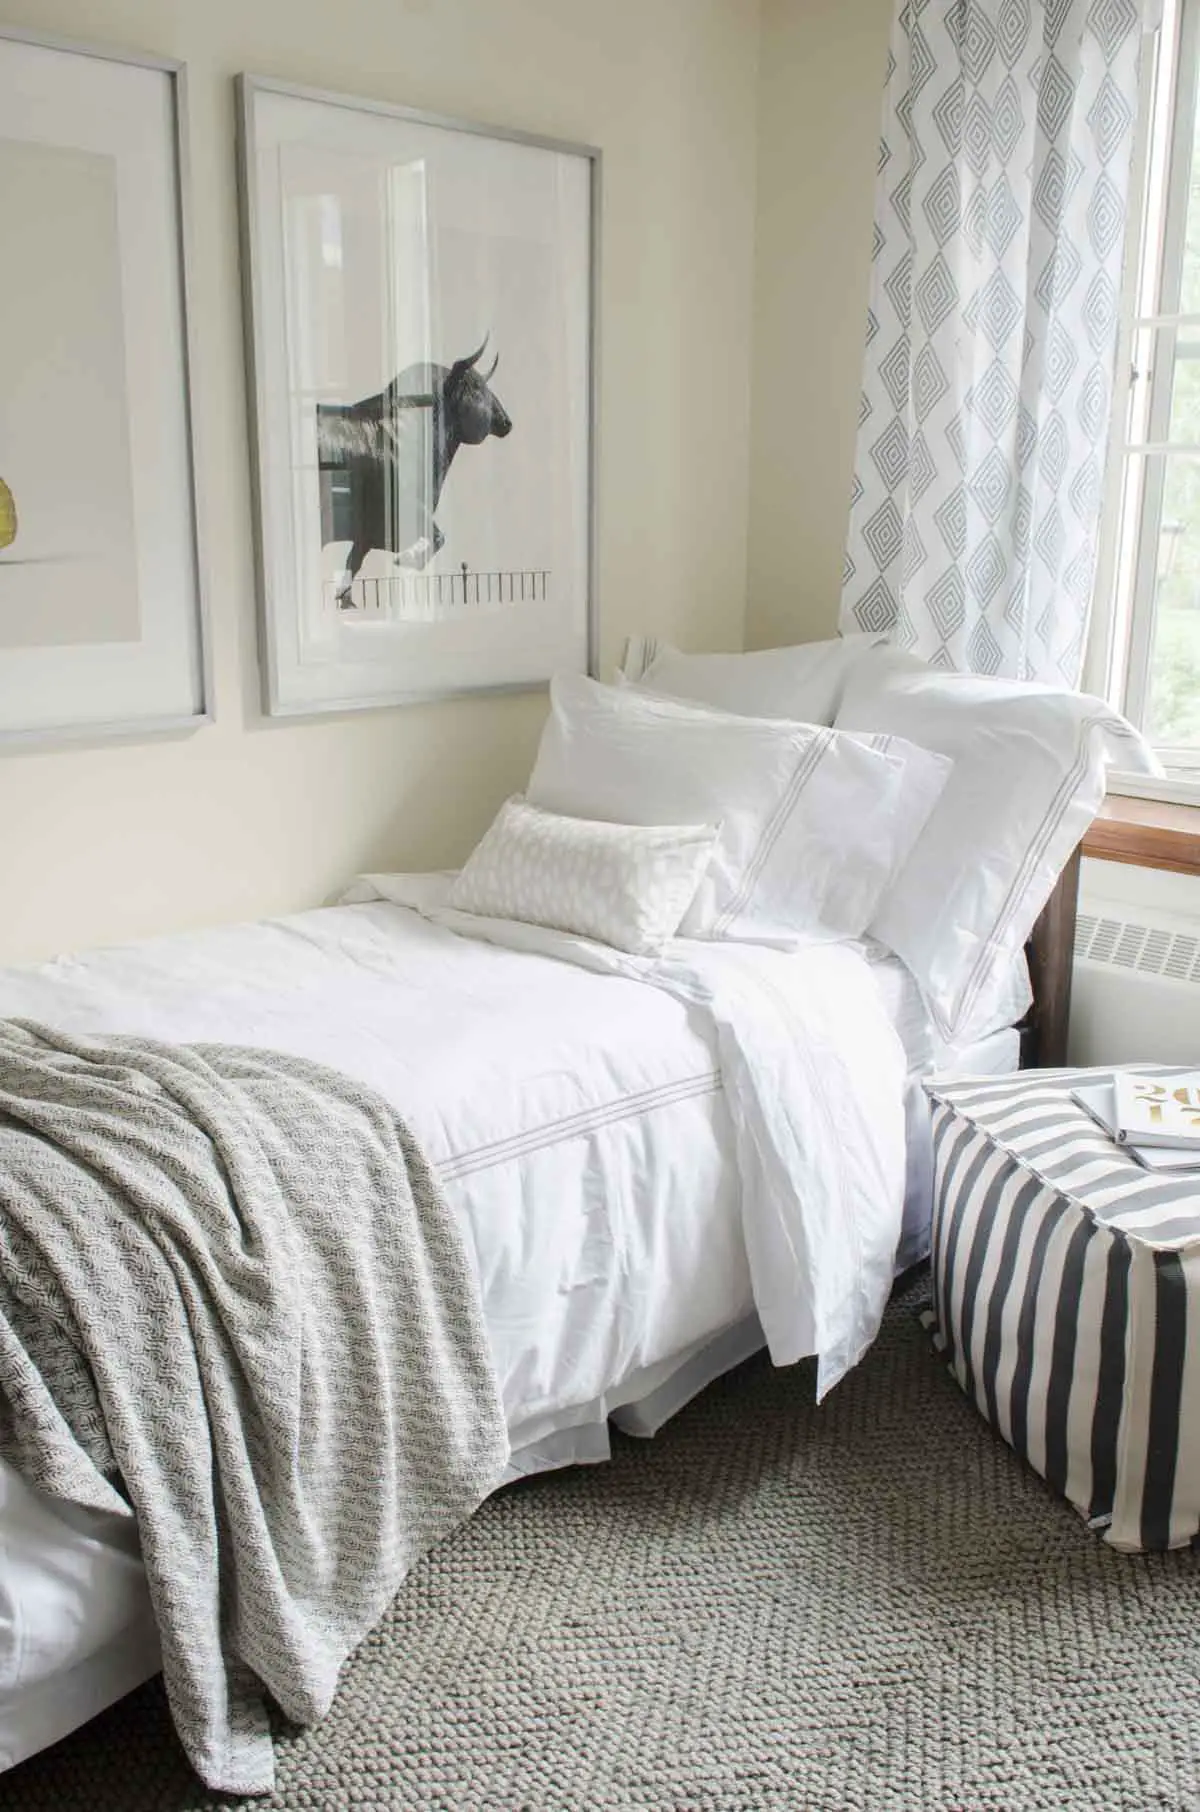 Dorm room decor essentials with bedding, pouf, art prints via @thouswellblog